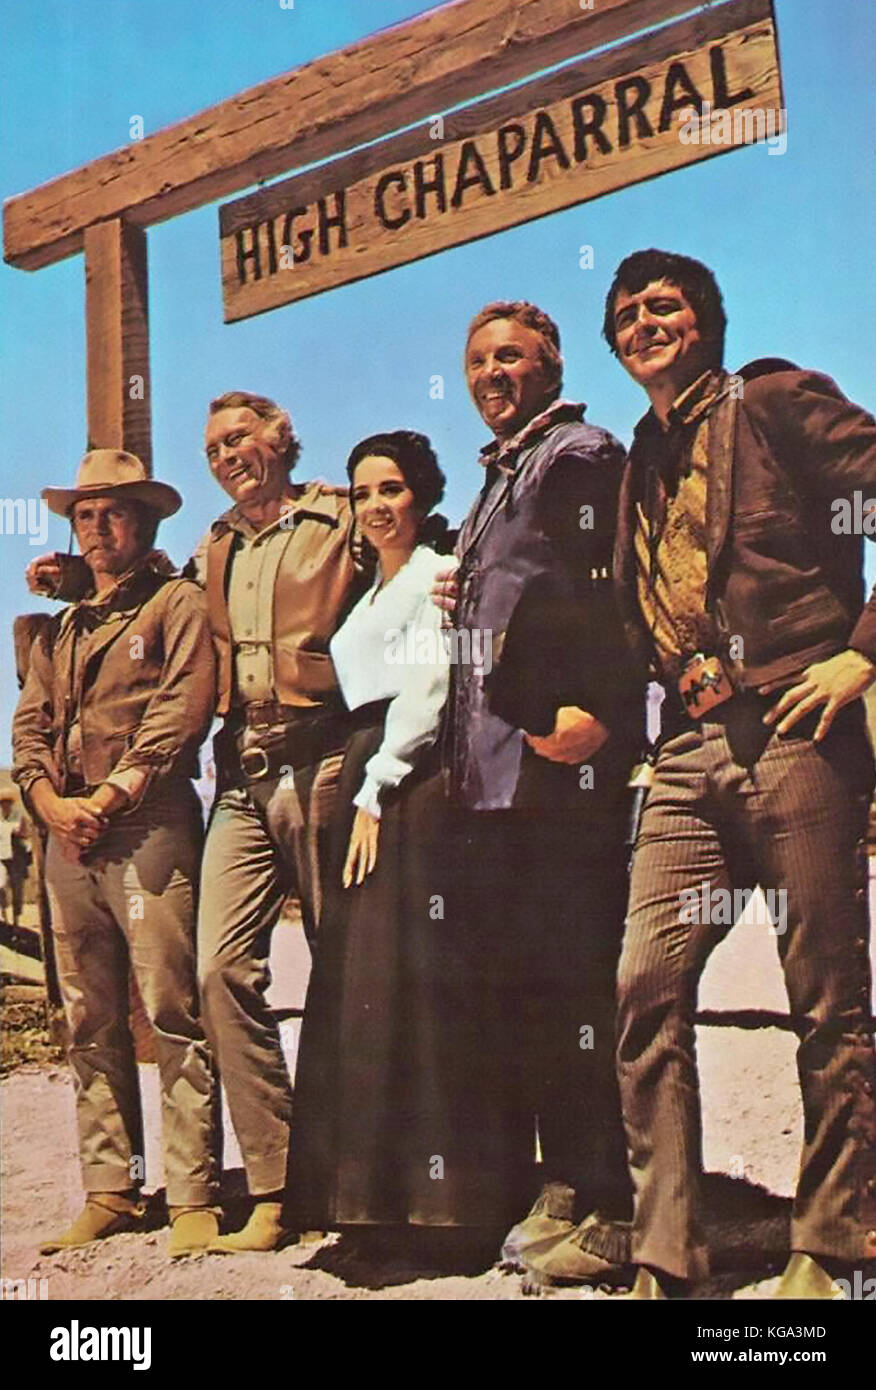 THE HIGH CHAPARRAL NBC Western TV series 1967-1971. From left: Mark Slade, Leif Erickson, Linda Cristal, John Vernon, Henry Darrow Stock Photo